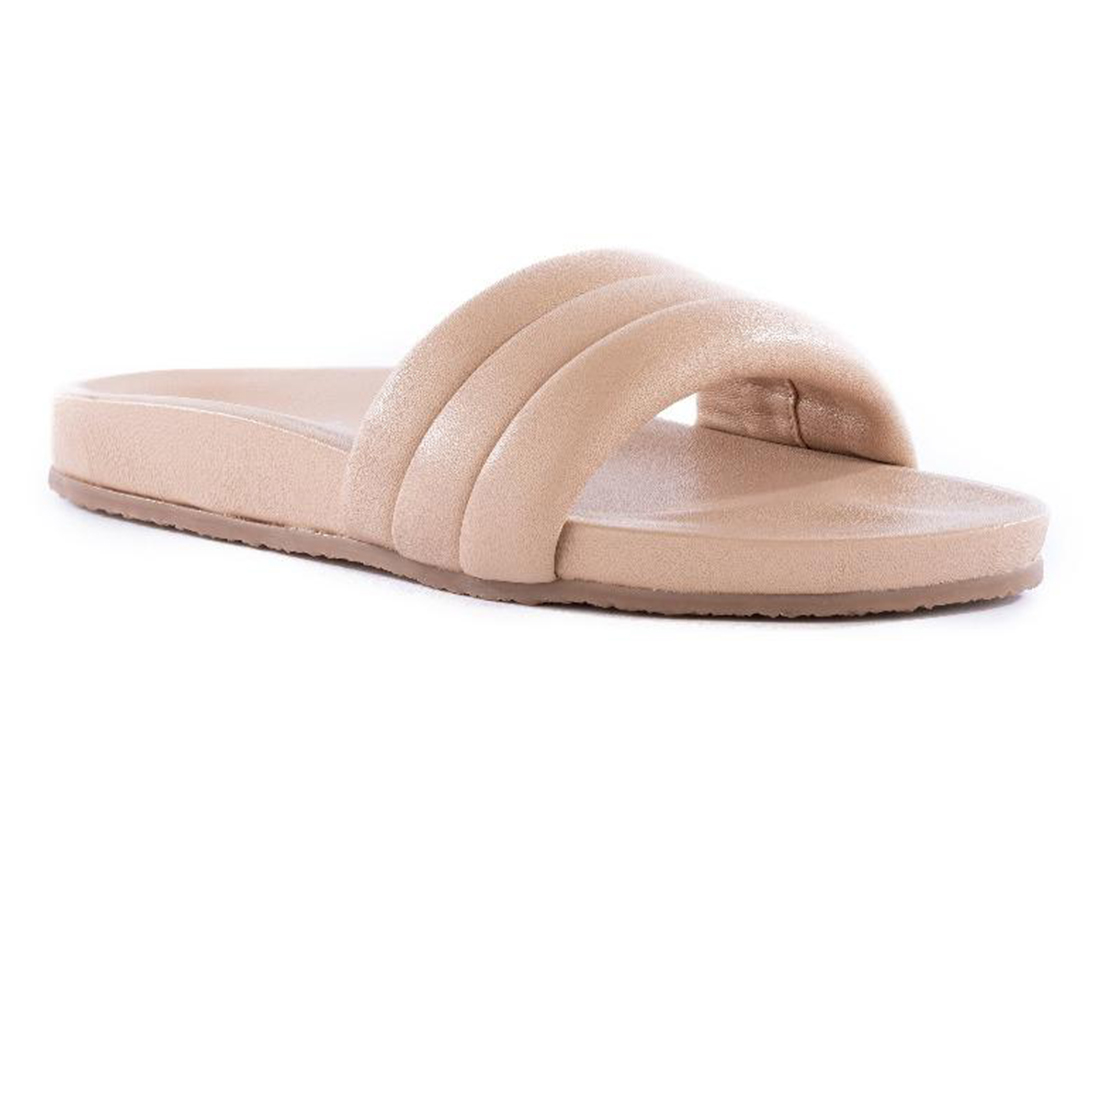 seychelles low key slide sandal in vacchetta leather 83710